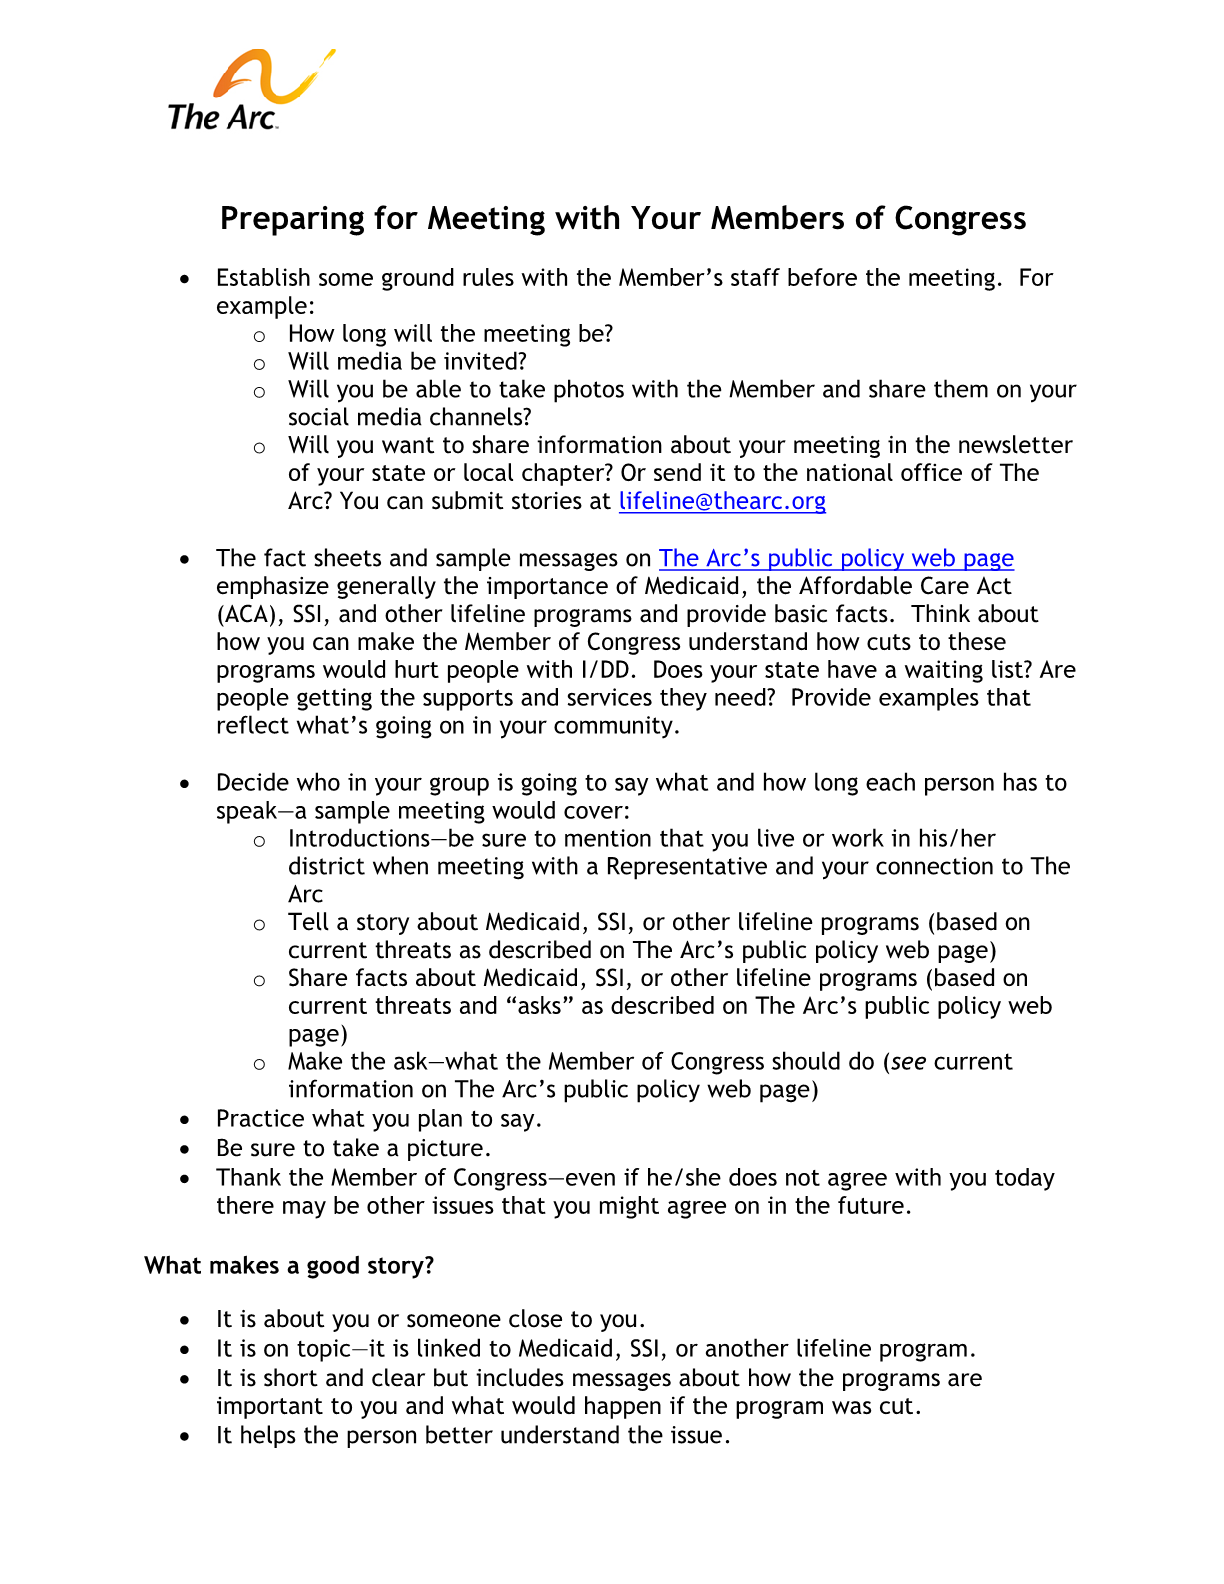 Preparing for Meetings with Members of Congress